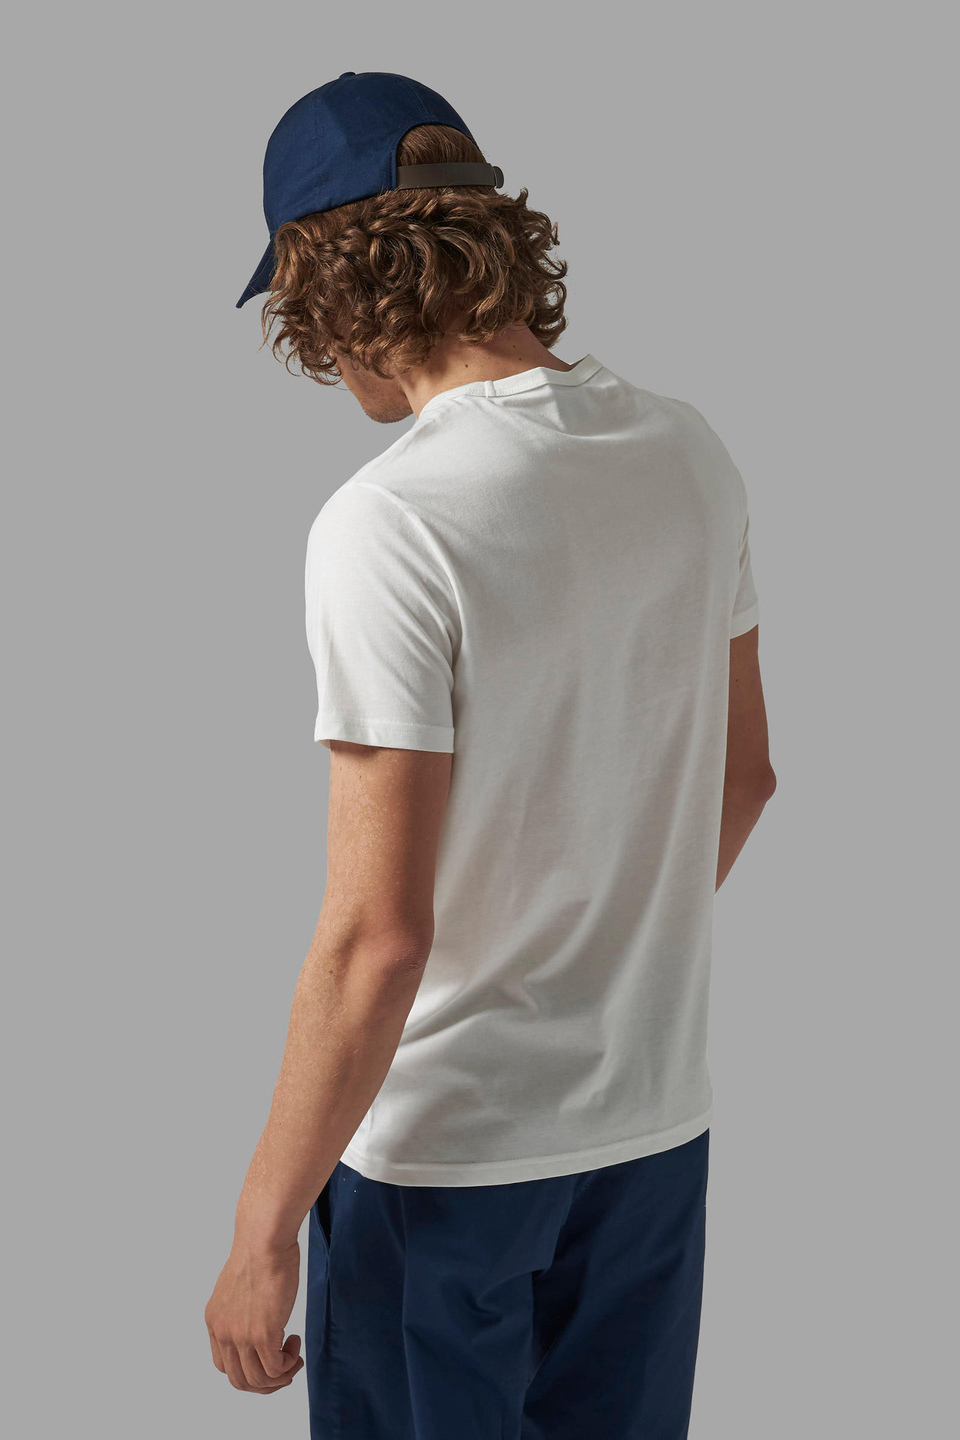 Herren-T-Shirt regular fit - La Martina - Official Online Shop